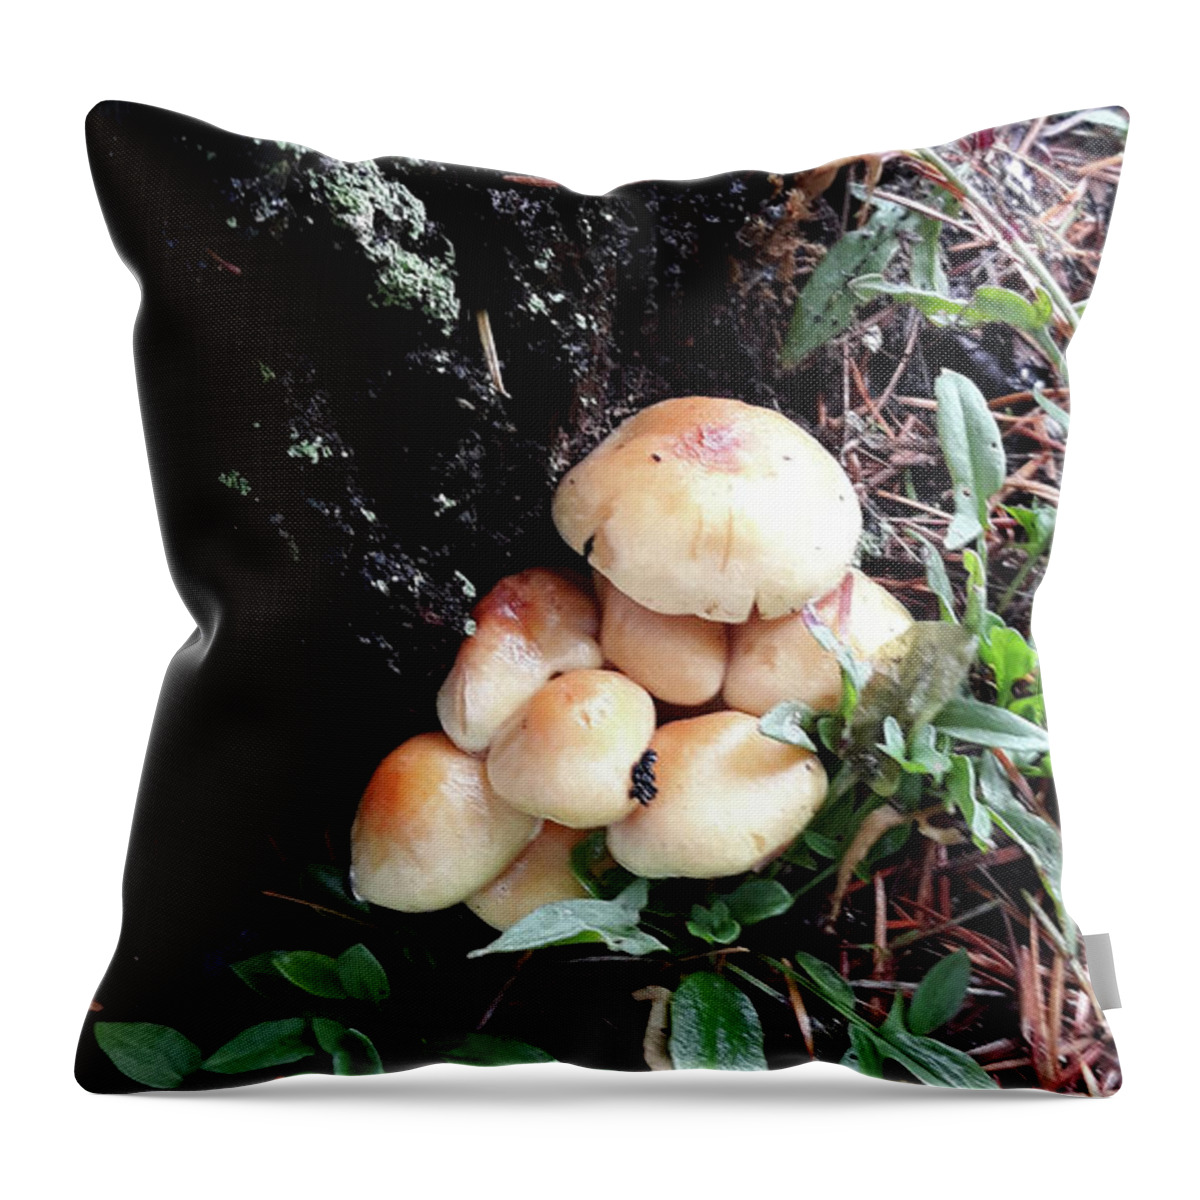 Mushroom Cluster Throw Pillow featuring the digital art Mushroom Cluster by Tom Janca